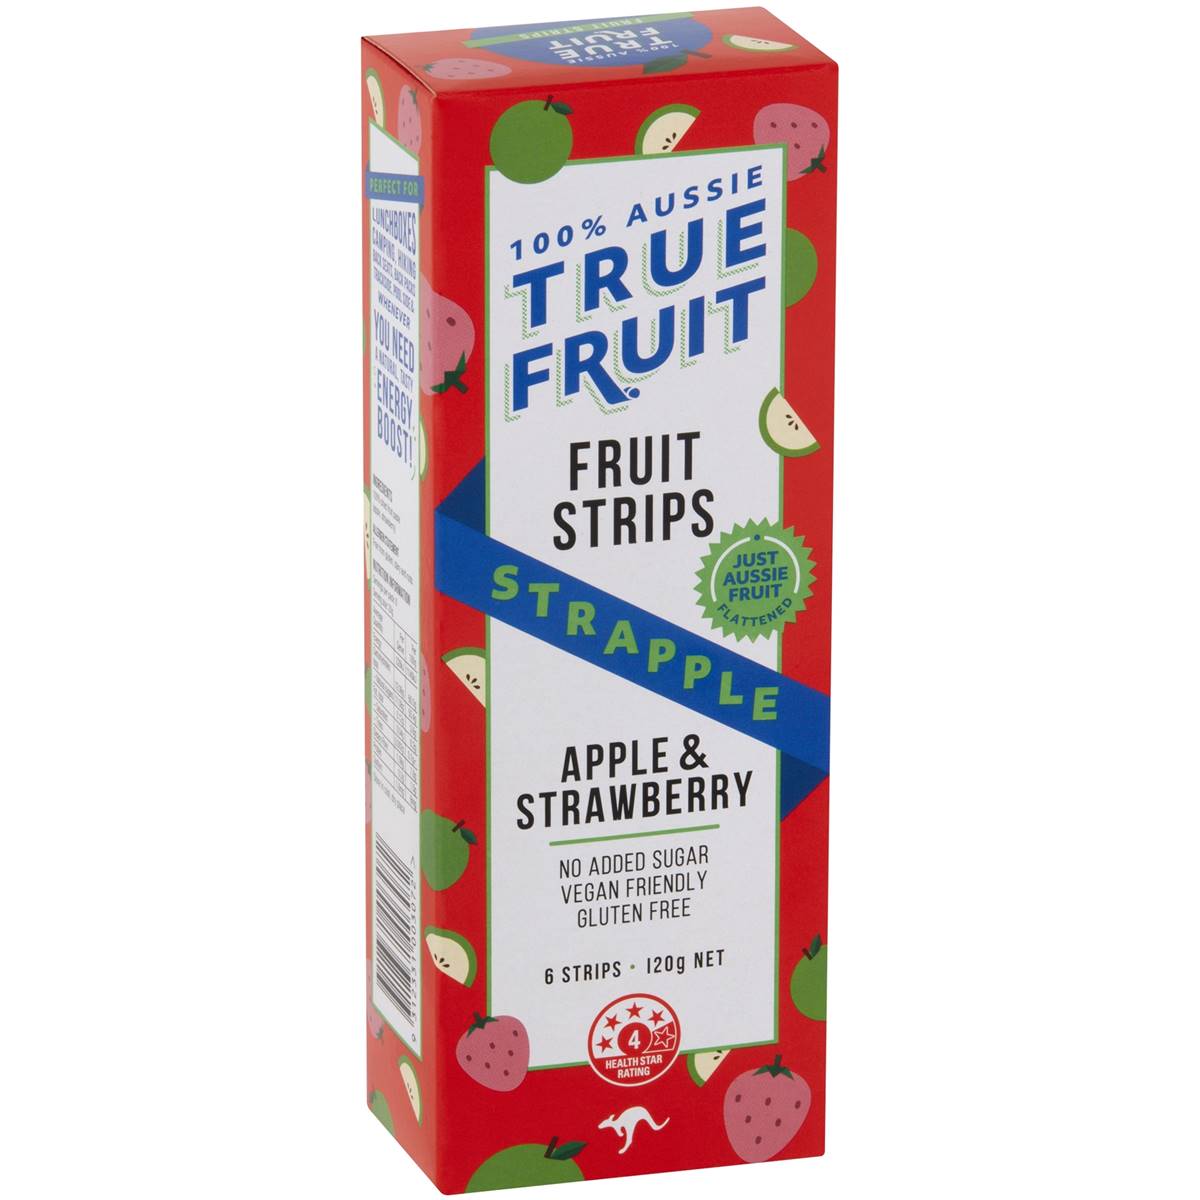 Calories in Sun Valley True Fruit Strapple Apple & Strawberry Fruit Strips